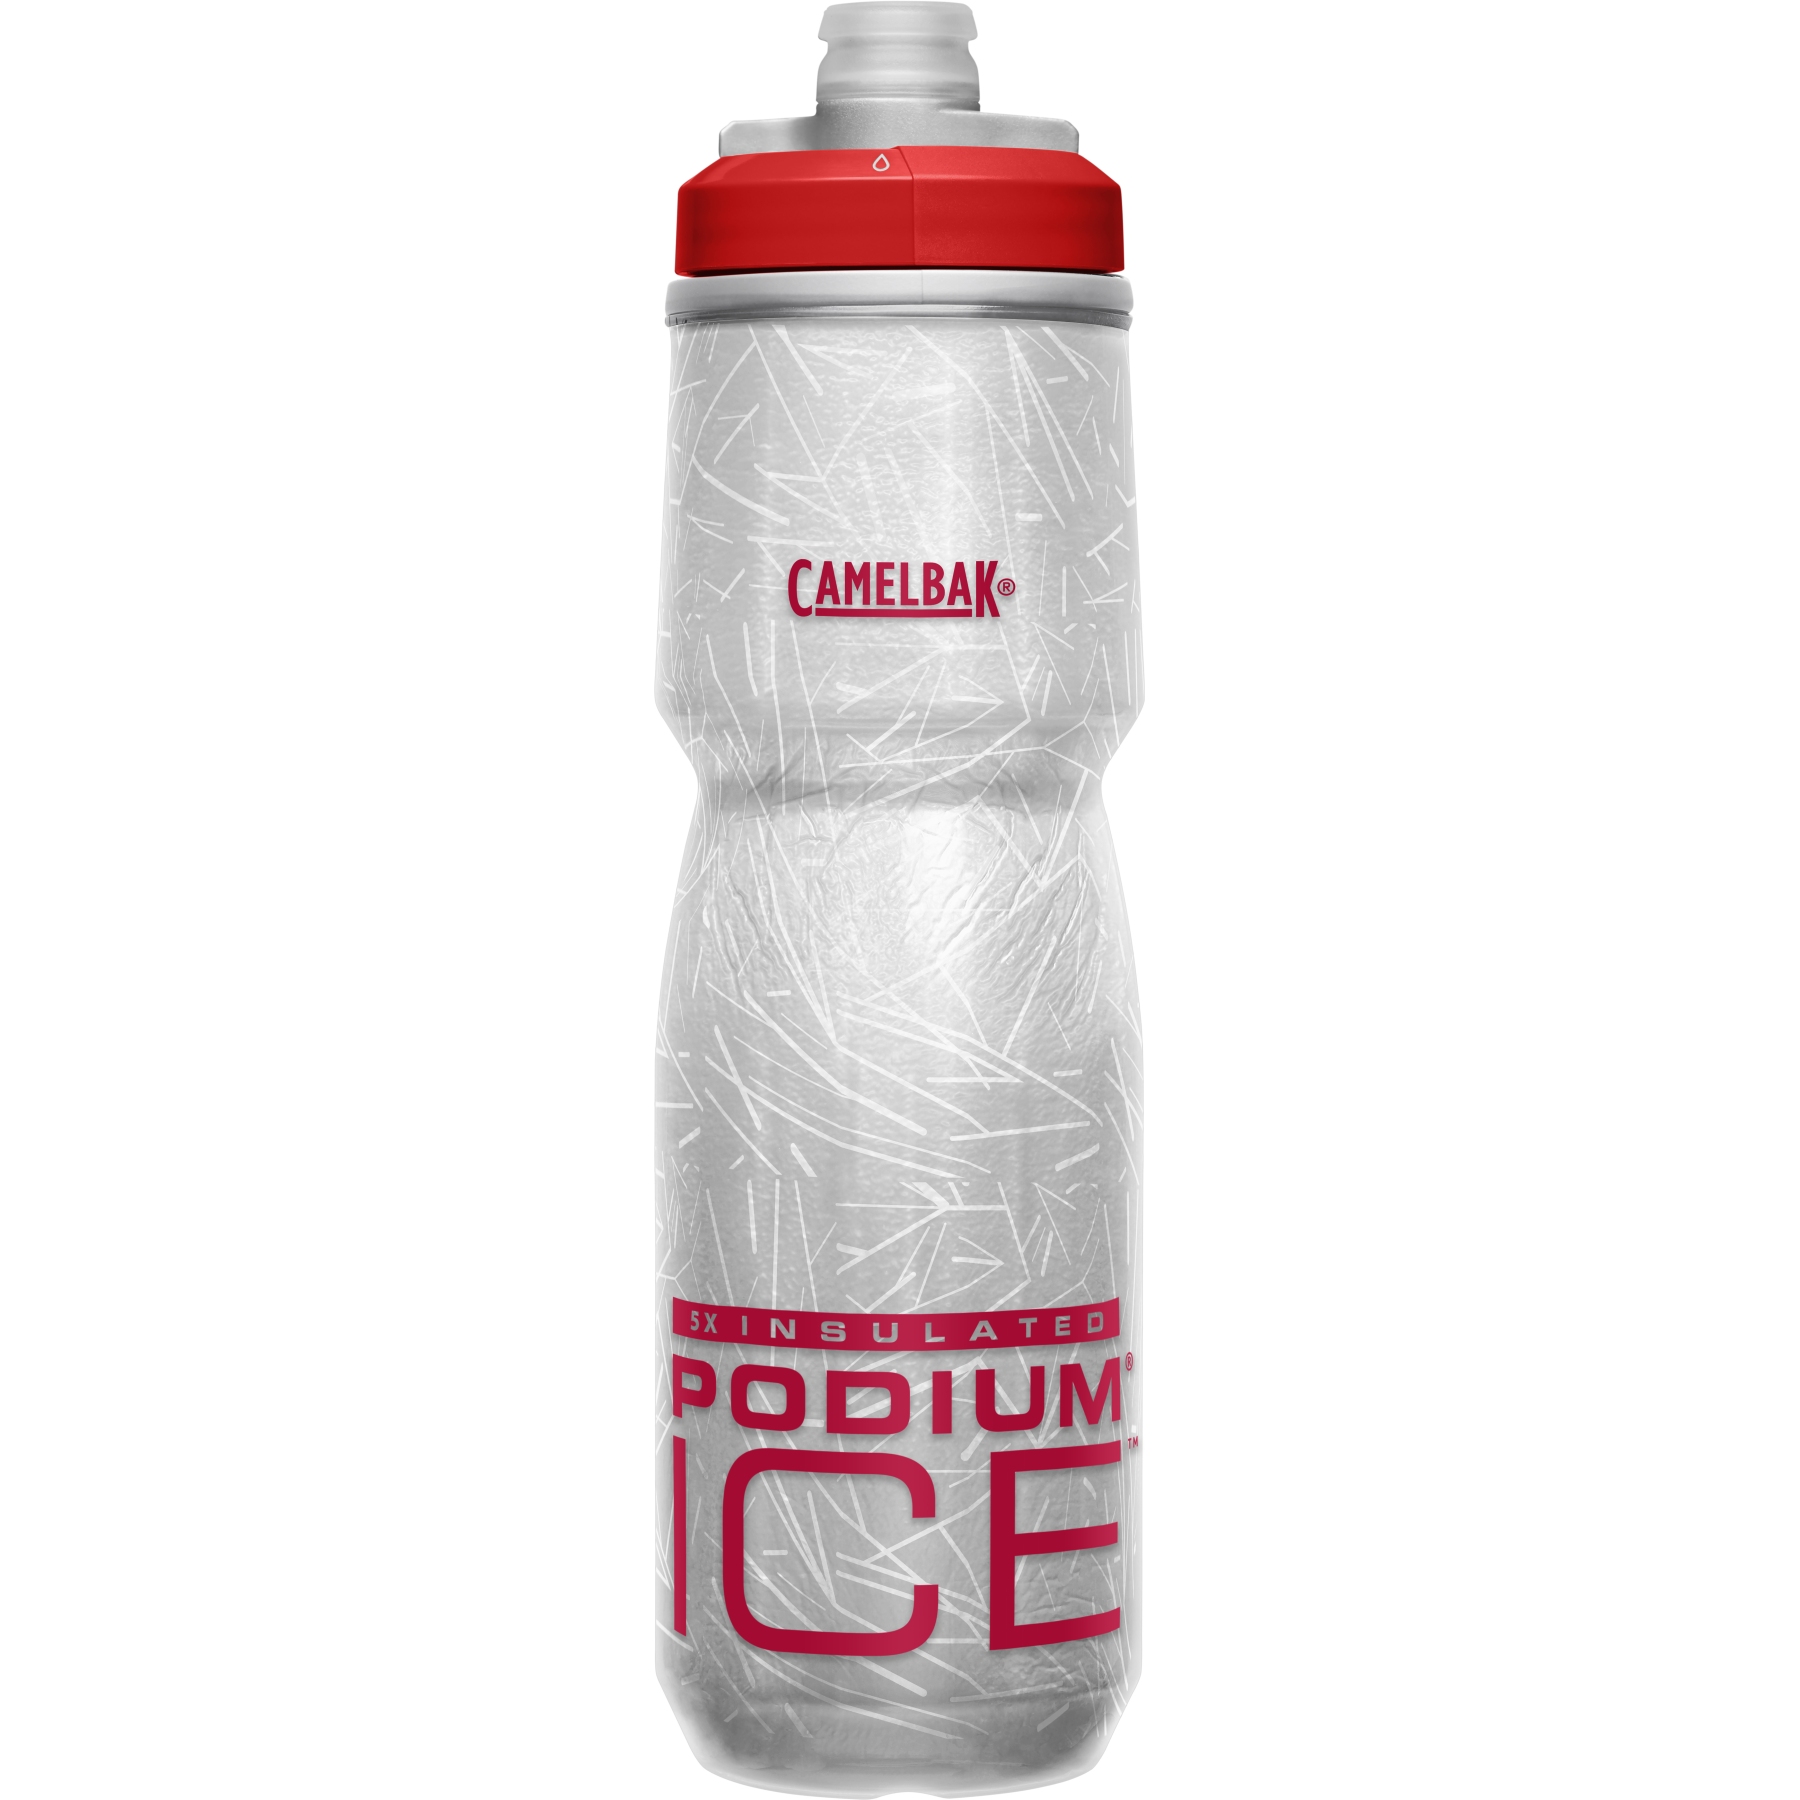 Productfoto van CamelBak Podium Ice Bottle 620ml - fiery red